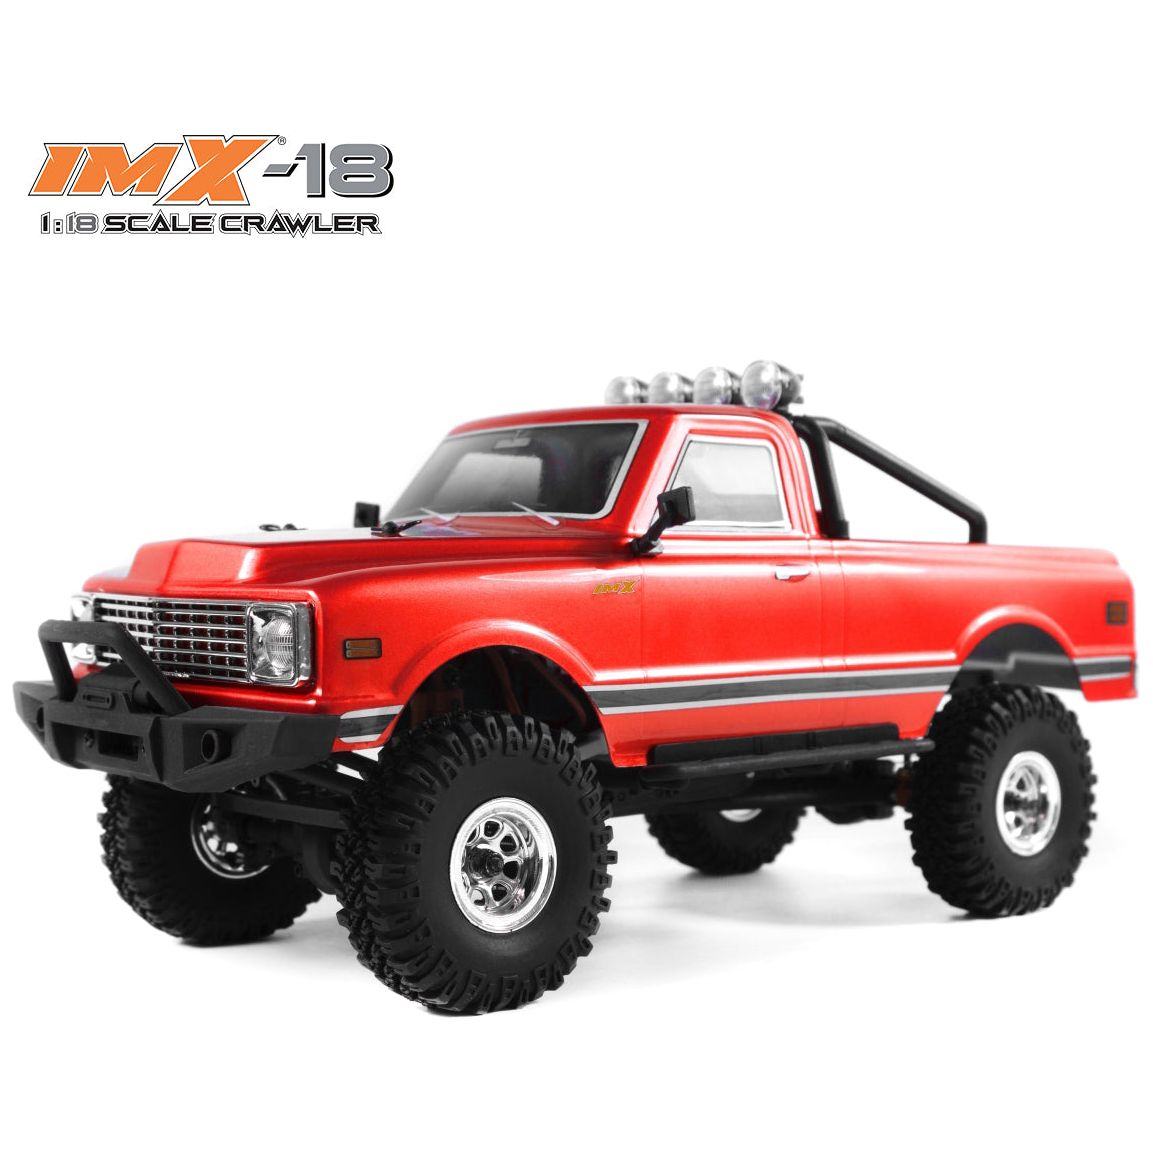 IMX-18 Jackhammer RTR 4WD 18th Scale Crawler